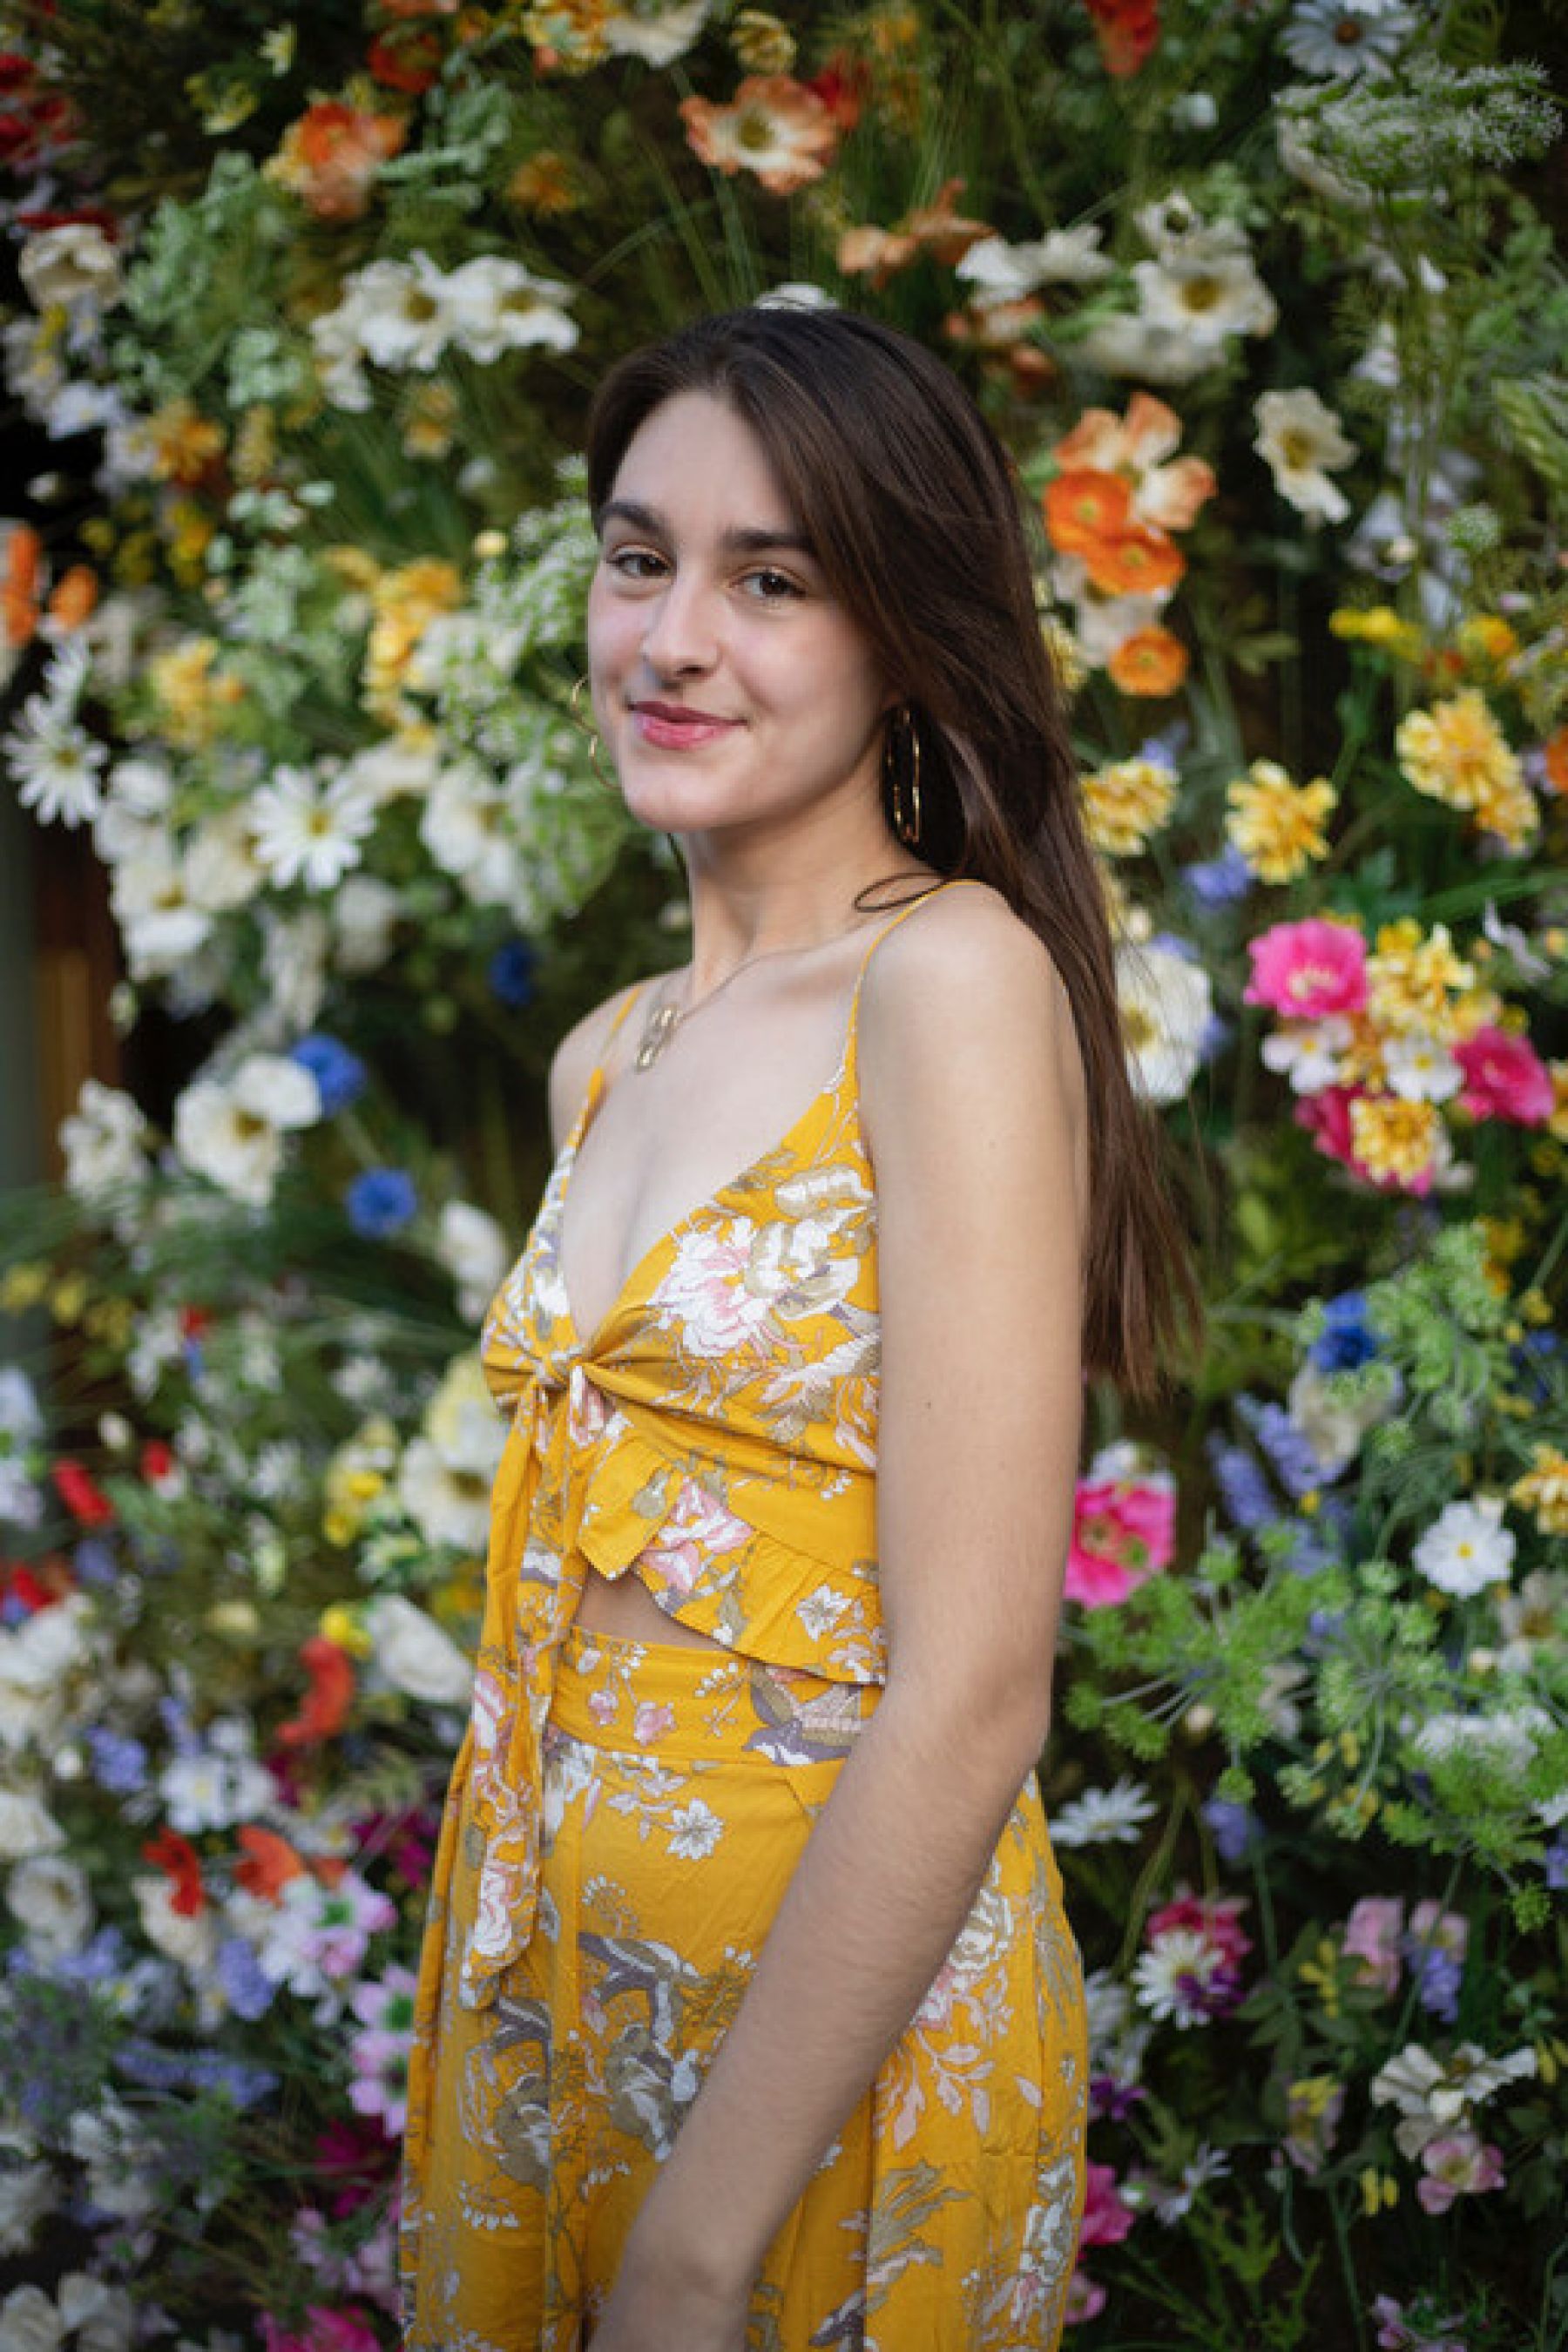 Portrait of Jordan Pietrafitta in a dress amidst some flowers.